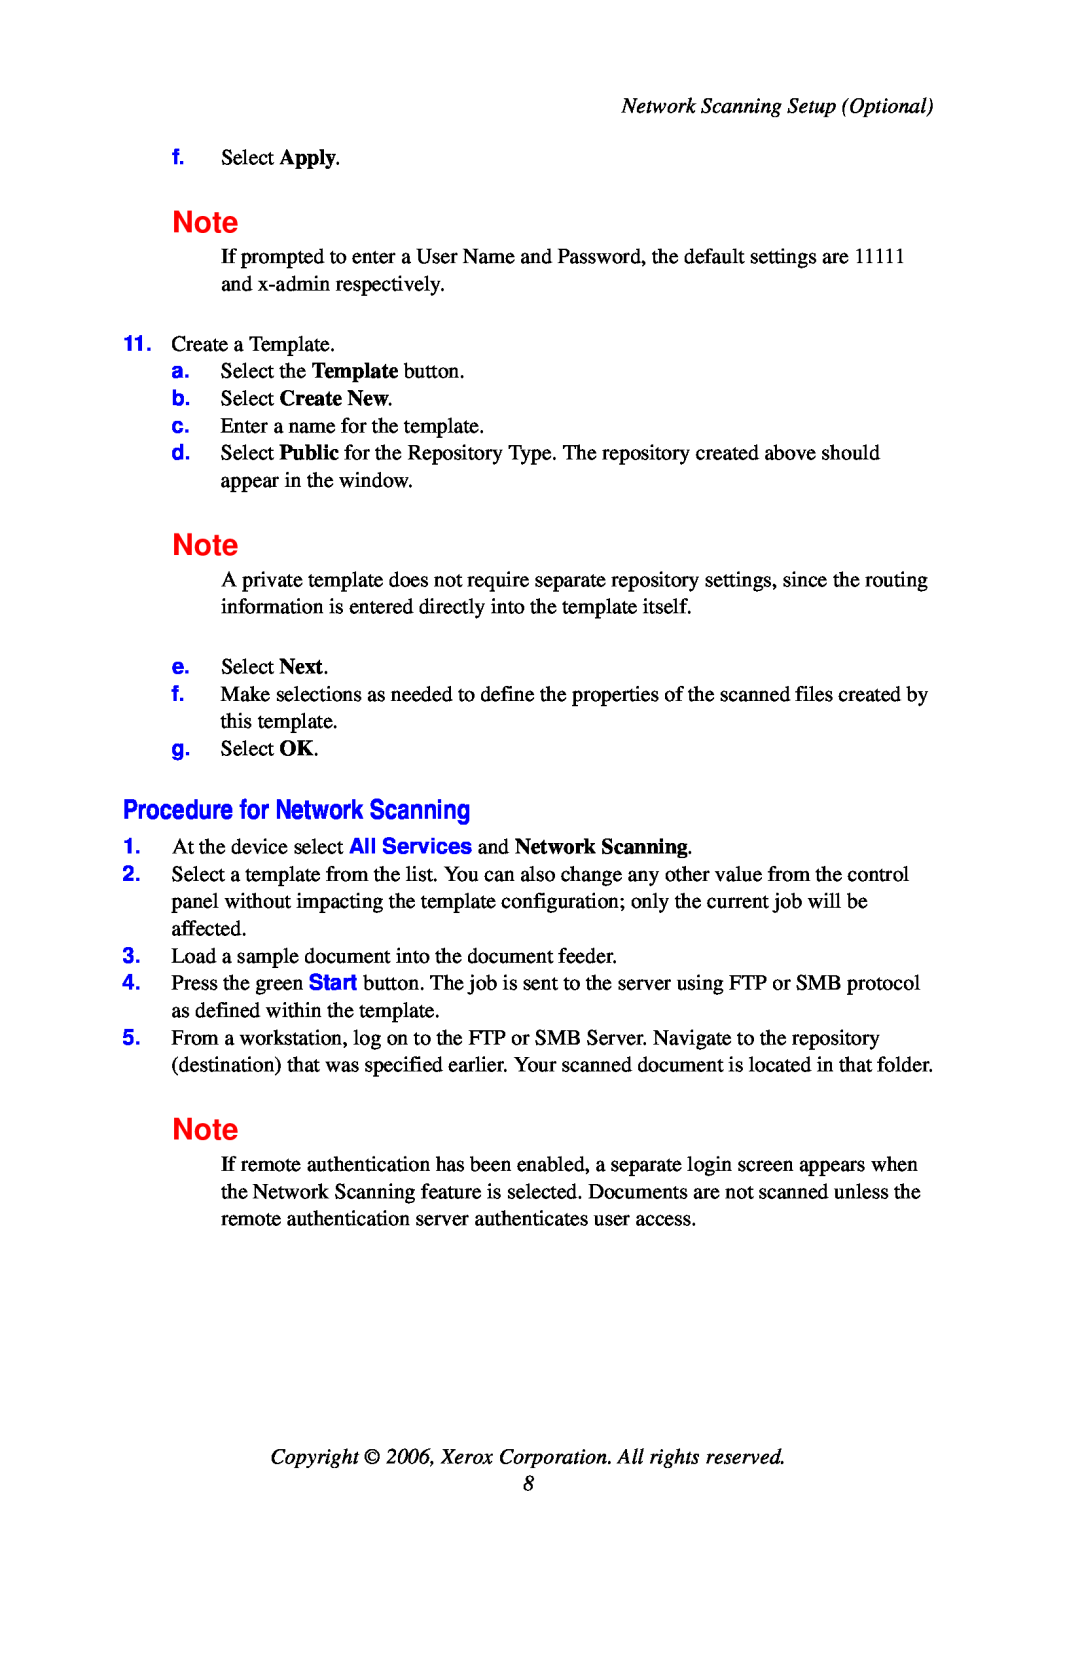 Xerox 7132 setup guide Procedure for Network Scanning, b.Select Create New, Network Scanning Setup Optional 